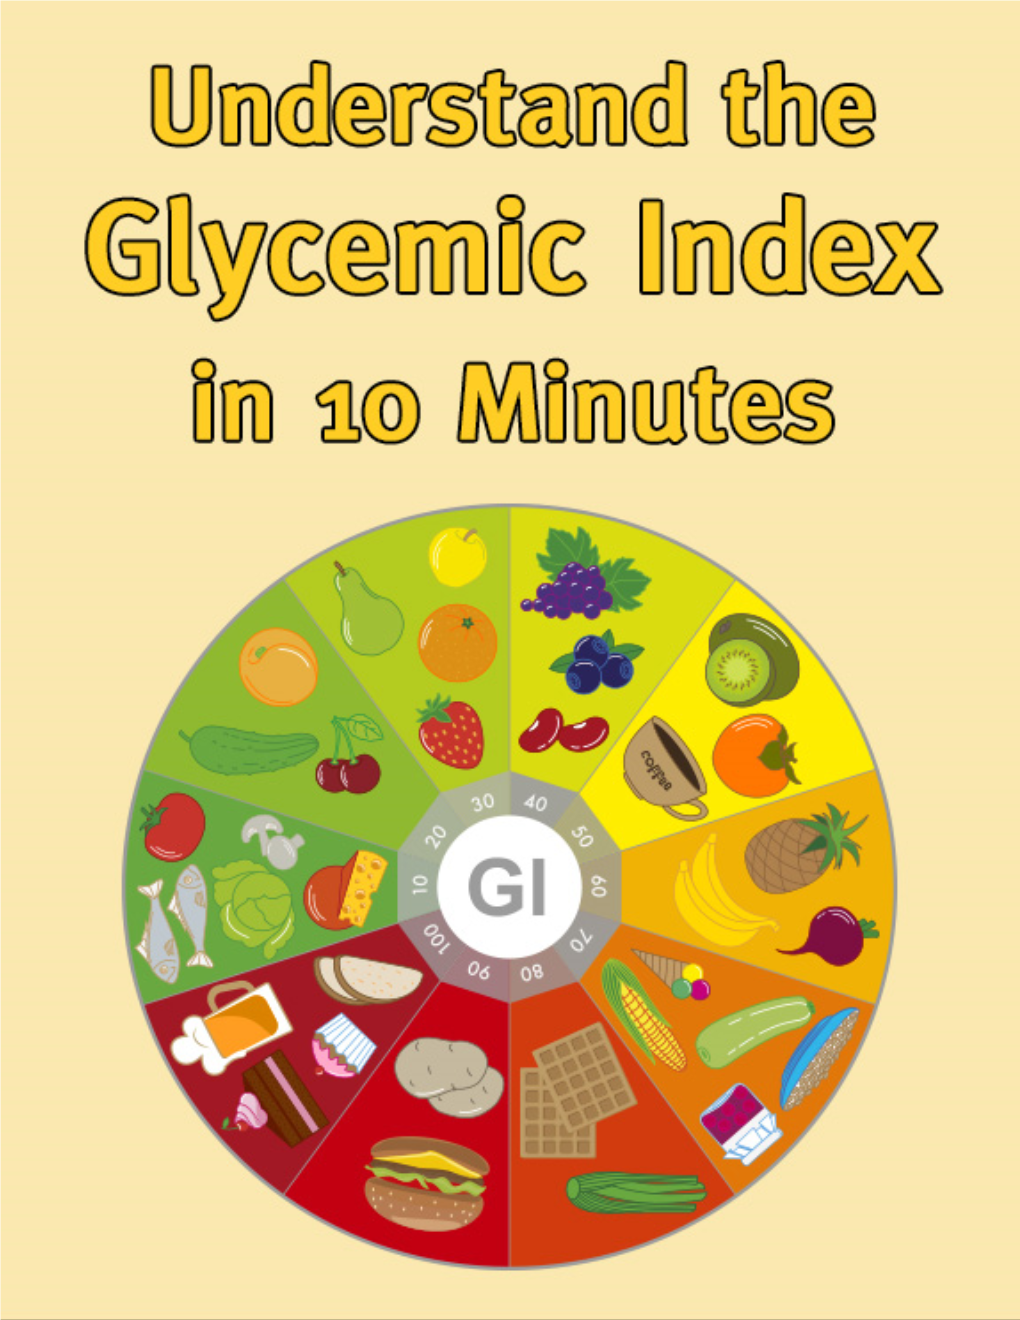 Glycemic Index Benefits